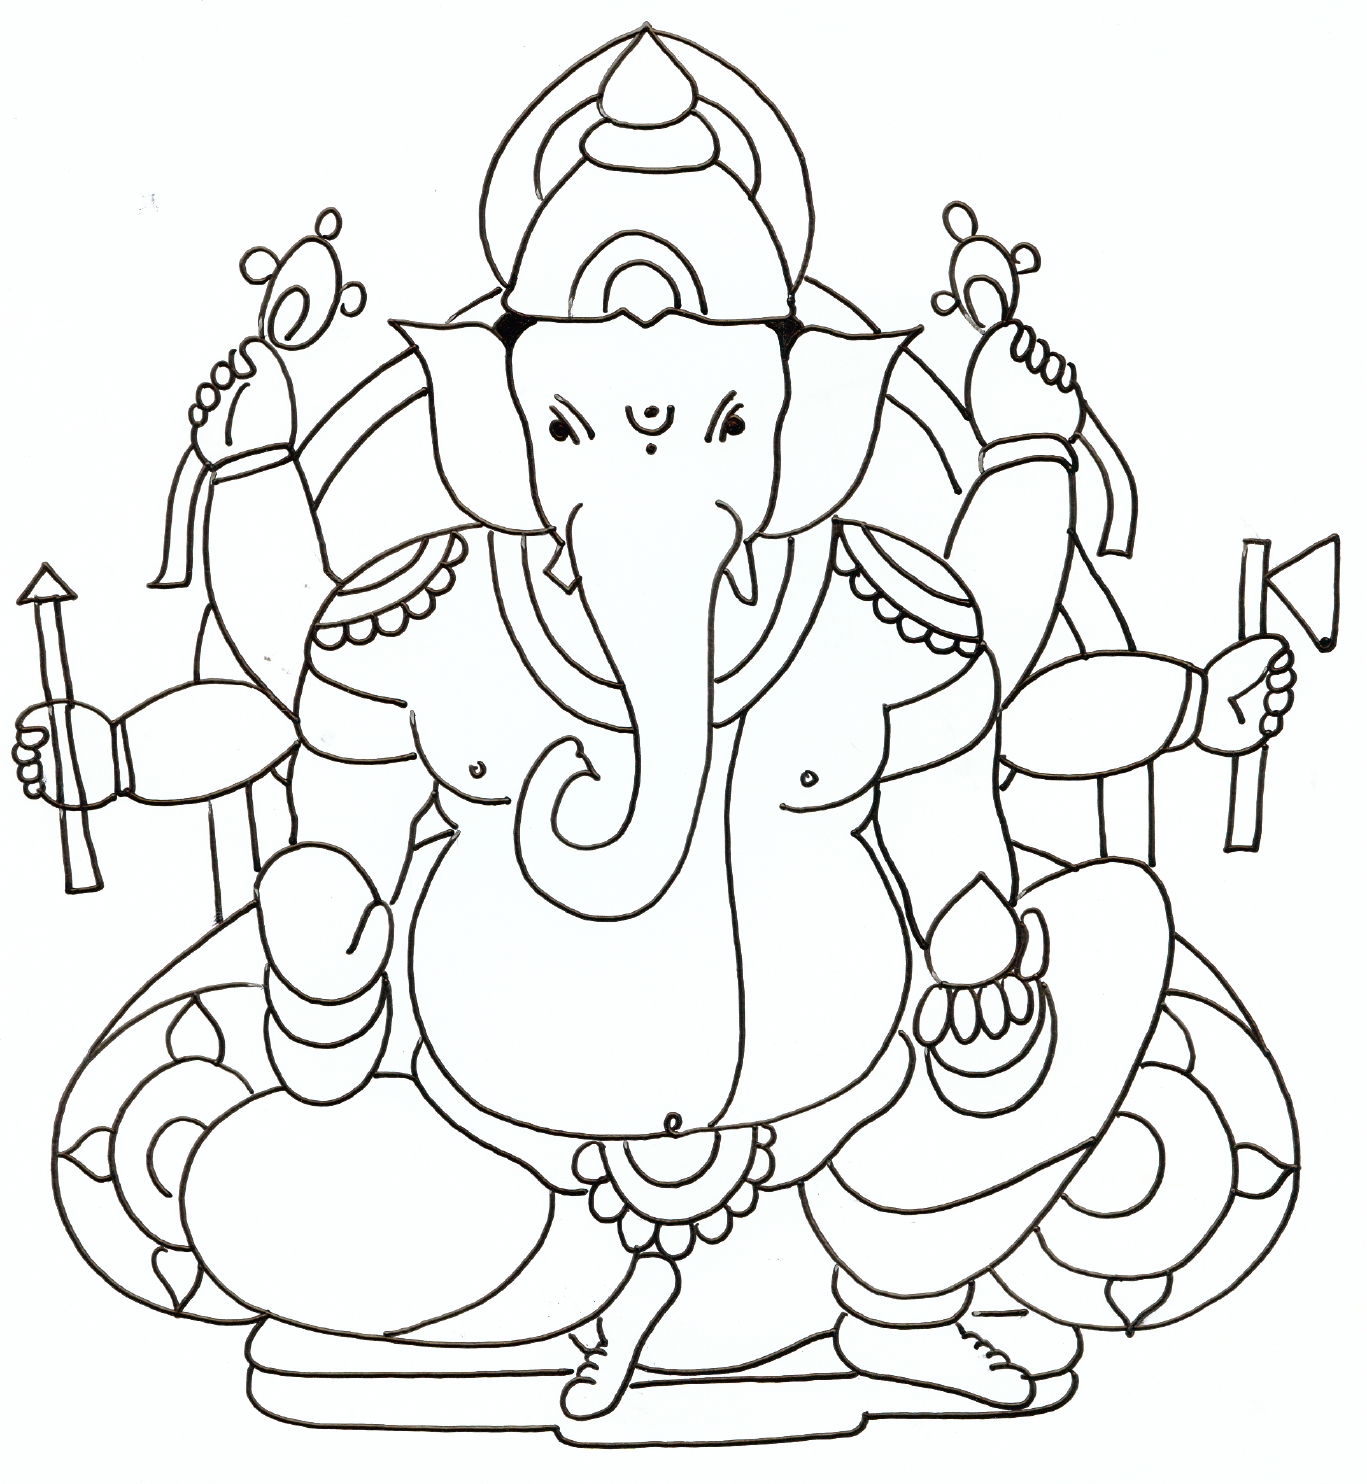 ART Tube | Ganesh Chaturthi Special Lord Ganesha Pencil Color Sketch  #GaneshChaturthi #Ganpati, #LordGanesha #PencilColor #Sketch #Ganeshji  #Drawin... | Instagram